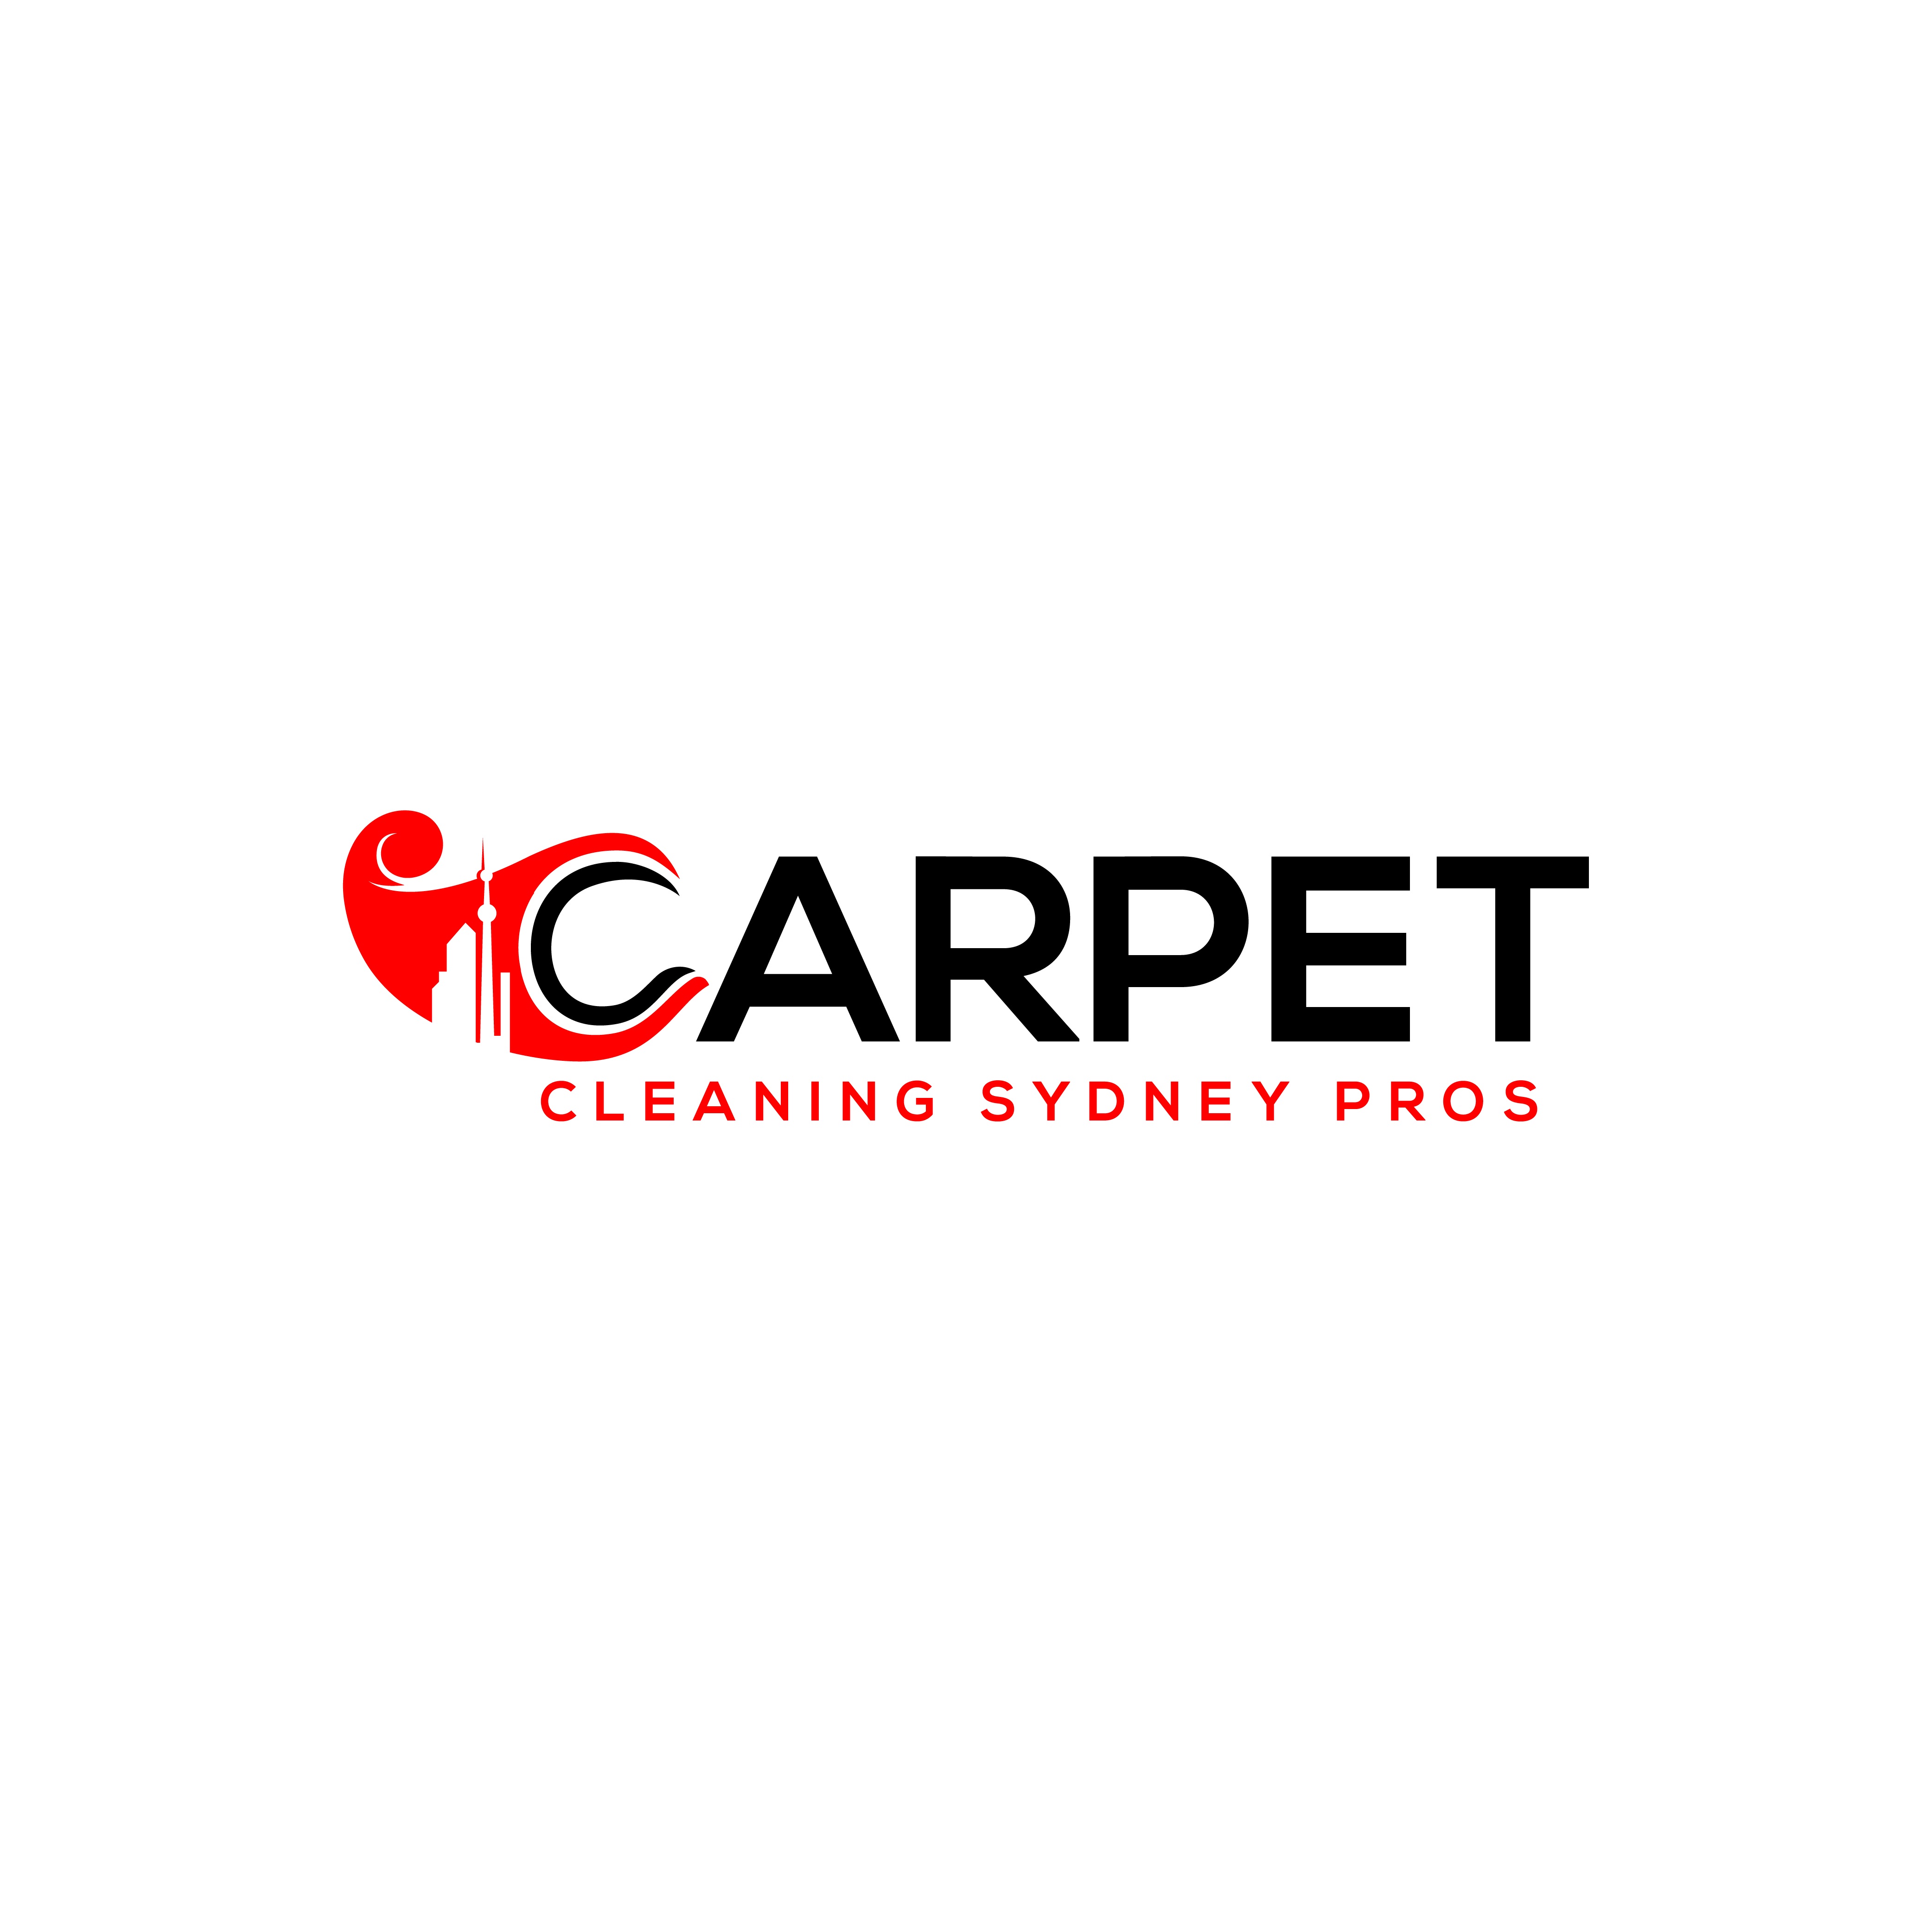 Carpet Cleaning Sydney Pros